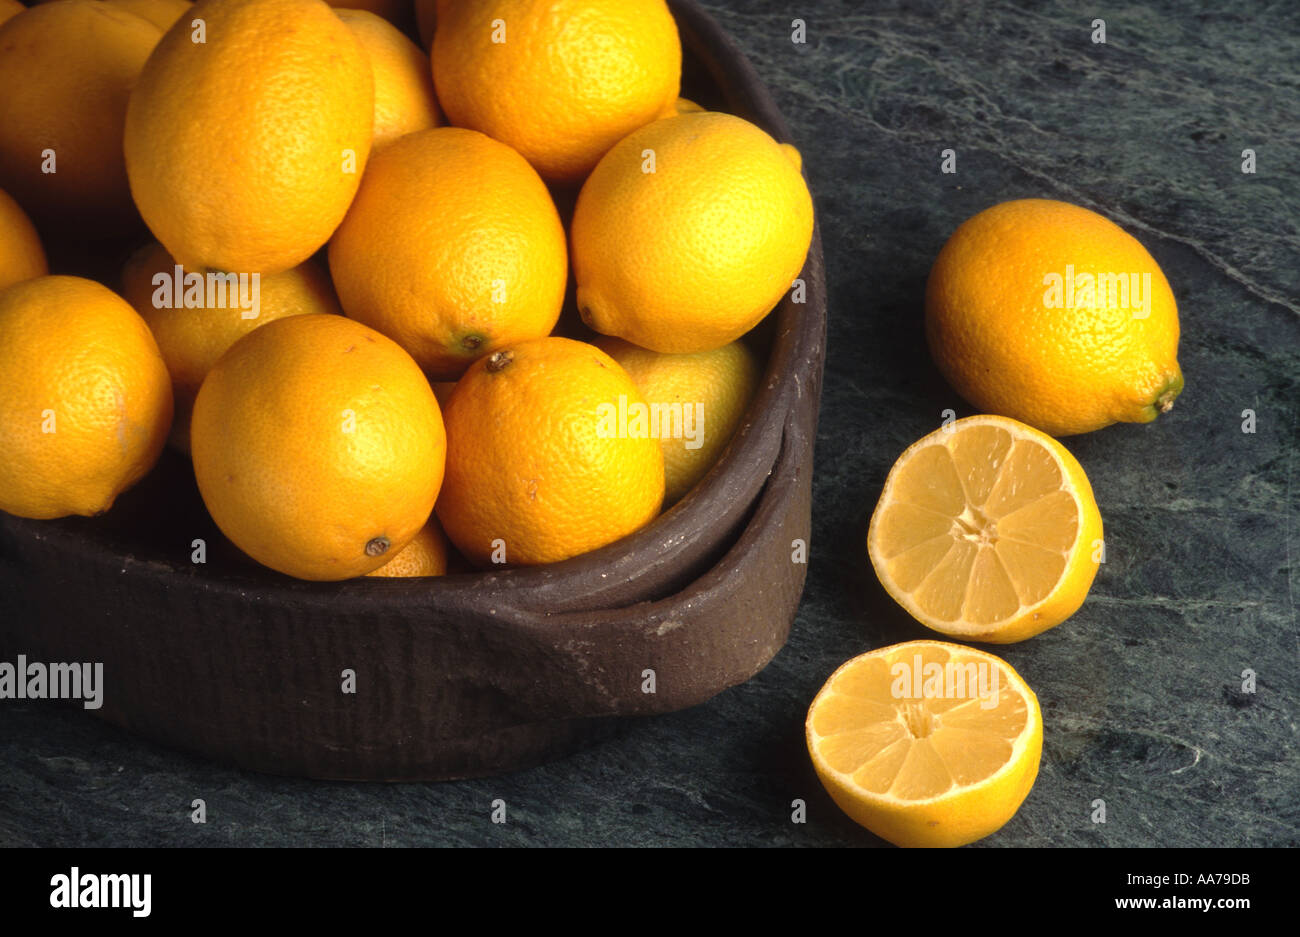 citrus fruit fruits lemon lemons food zitrone zitronen yellow sour acid Stock Photo